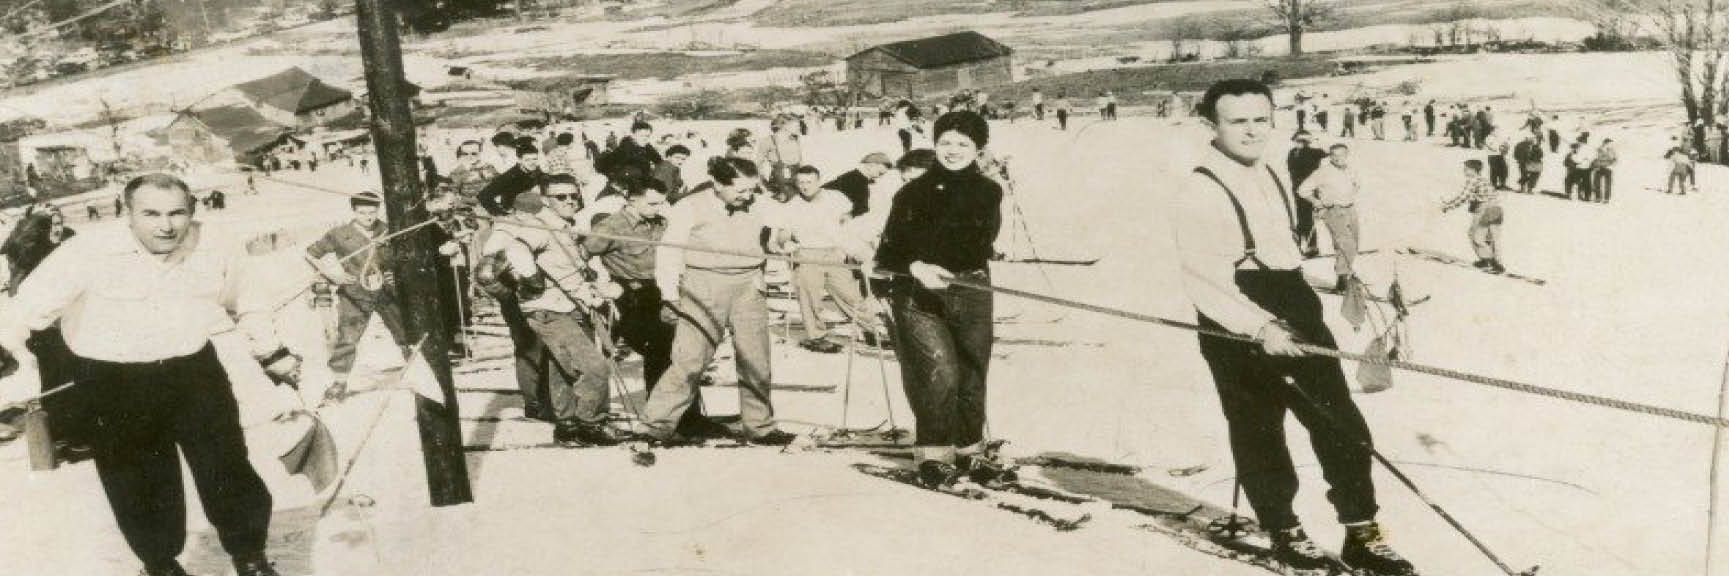 WV Governor’s Cup Ski Race: The Bob and Anita Barton Award and the Legendary Ski History of Canaan Valley 